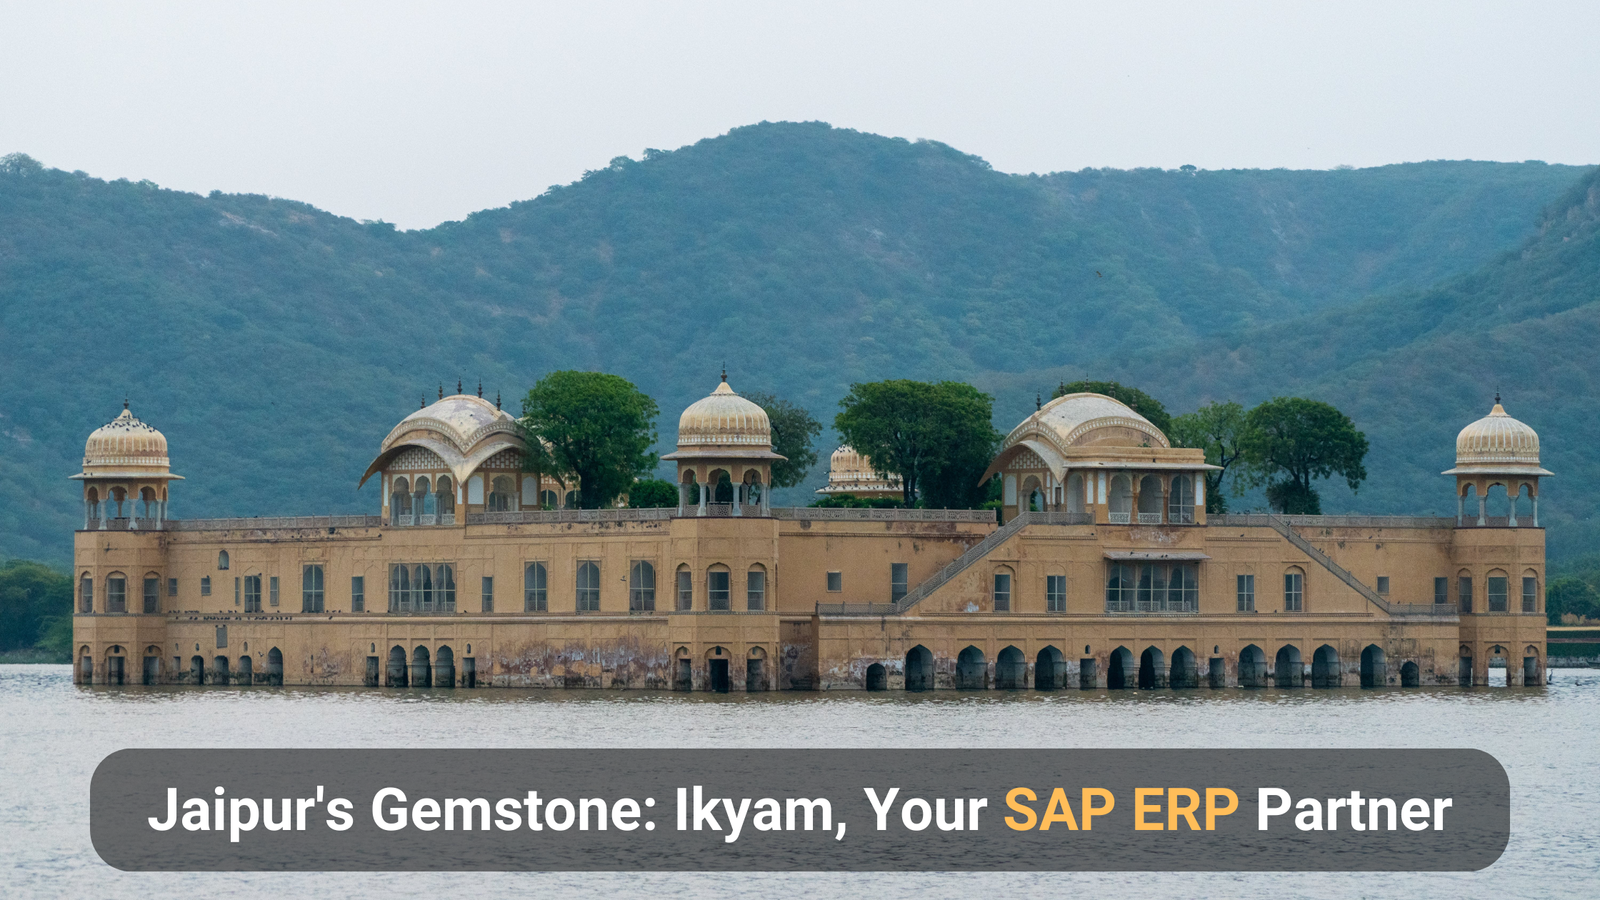 SAP Partner in Jaipur